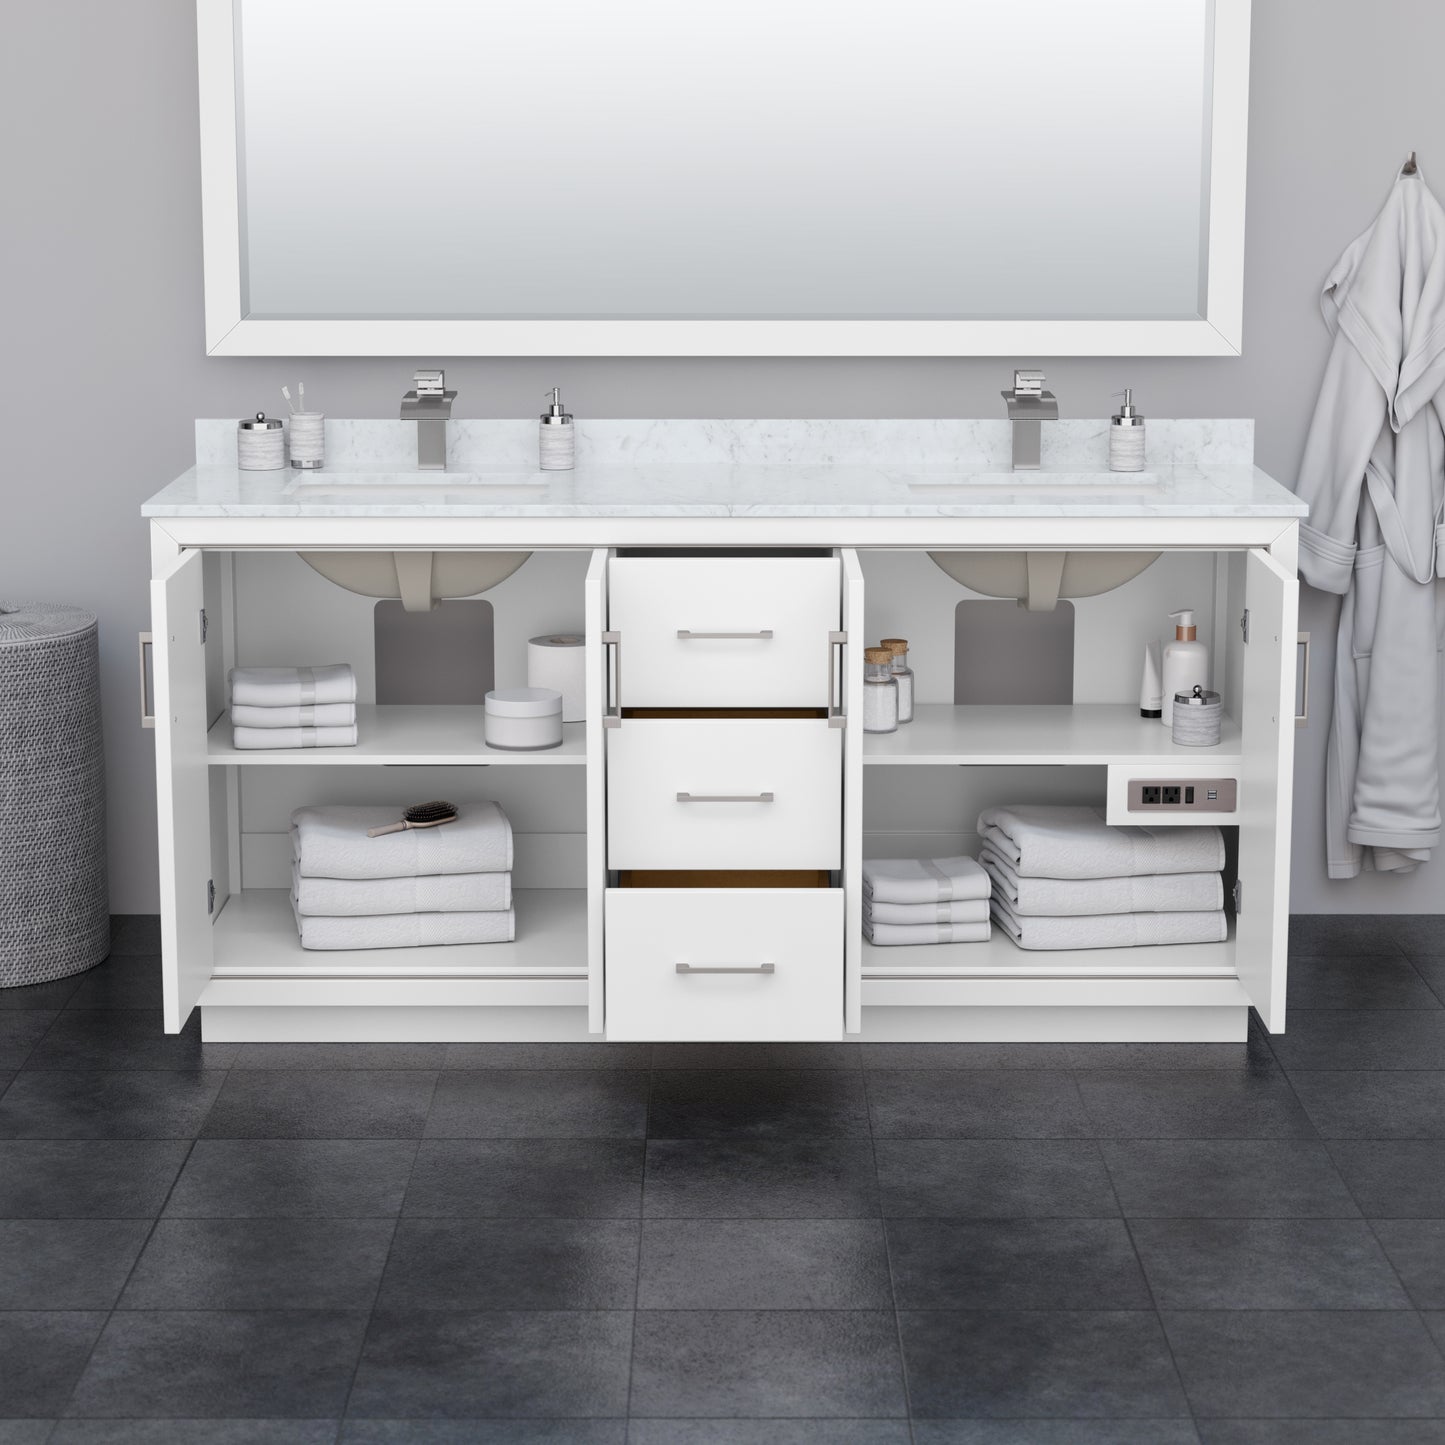 Wyndham Icon 72 Inch Double Bathroom Vanity White Carrara Marble Countertop with Undermount Square Sinks in Brushed Nickel Trim - Luxe Bathroom Vanities